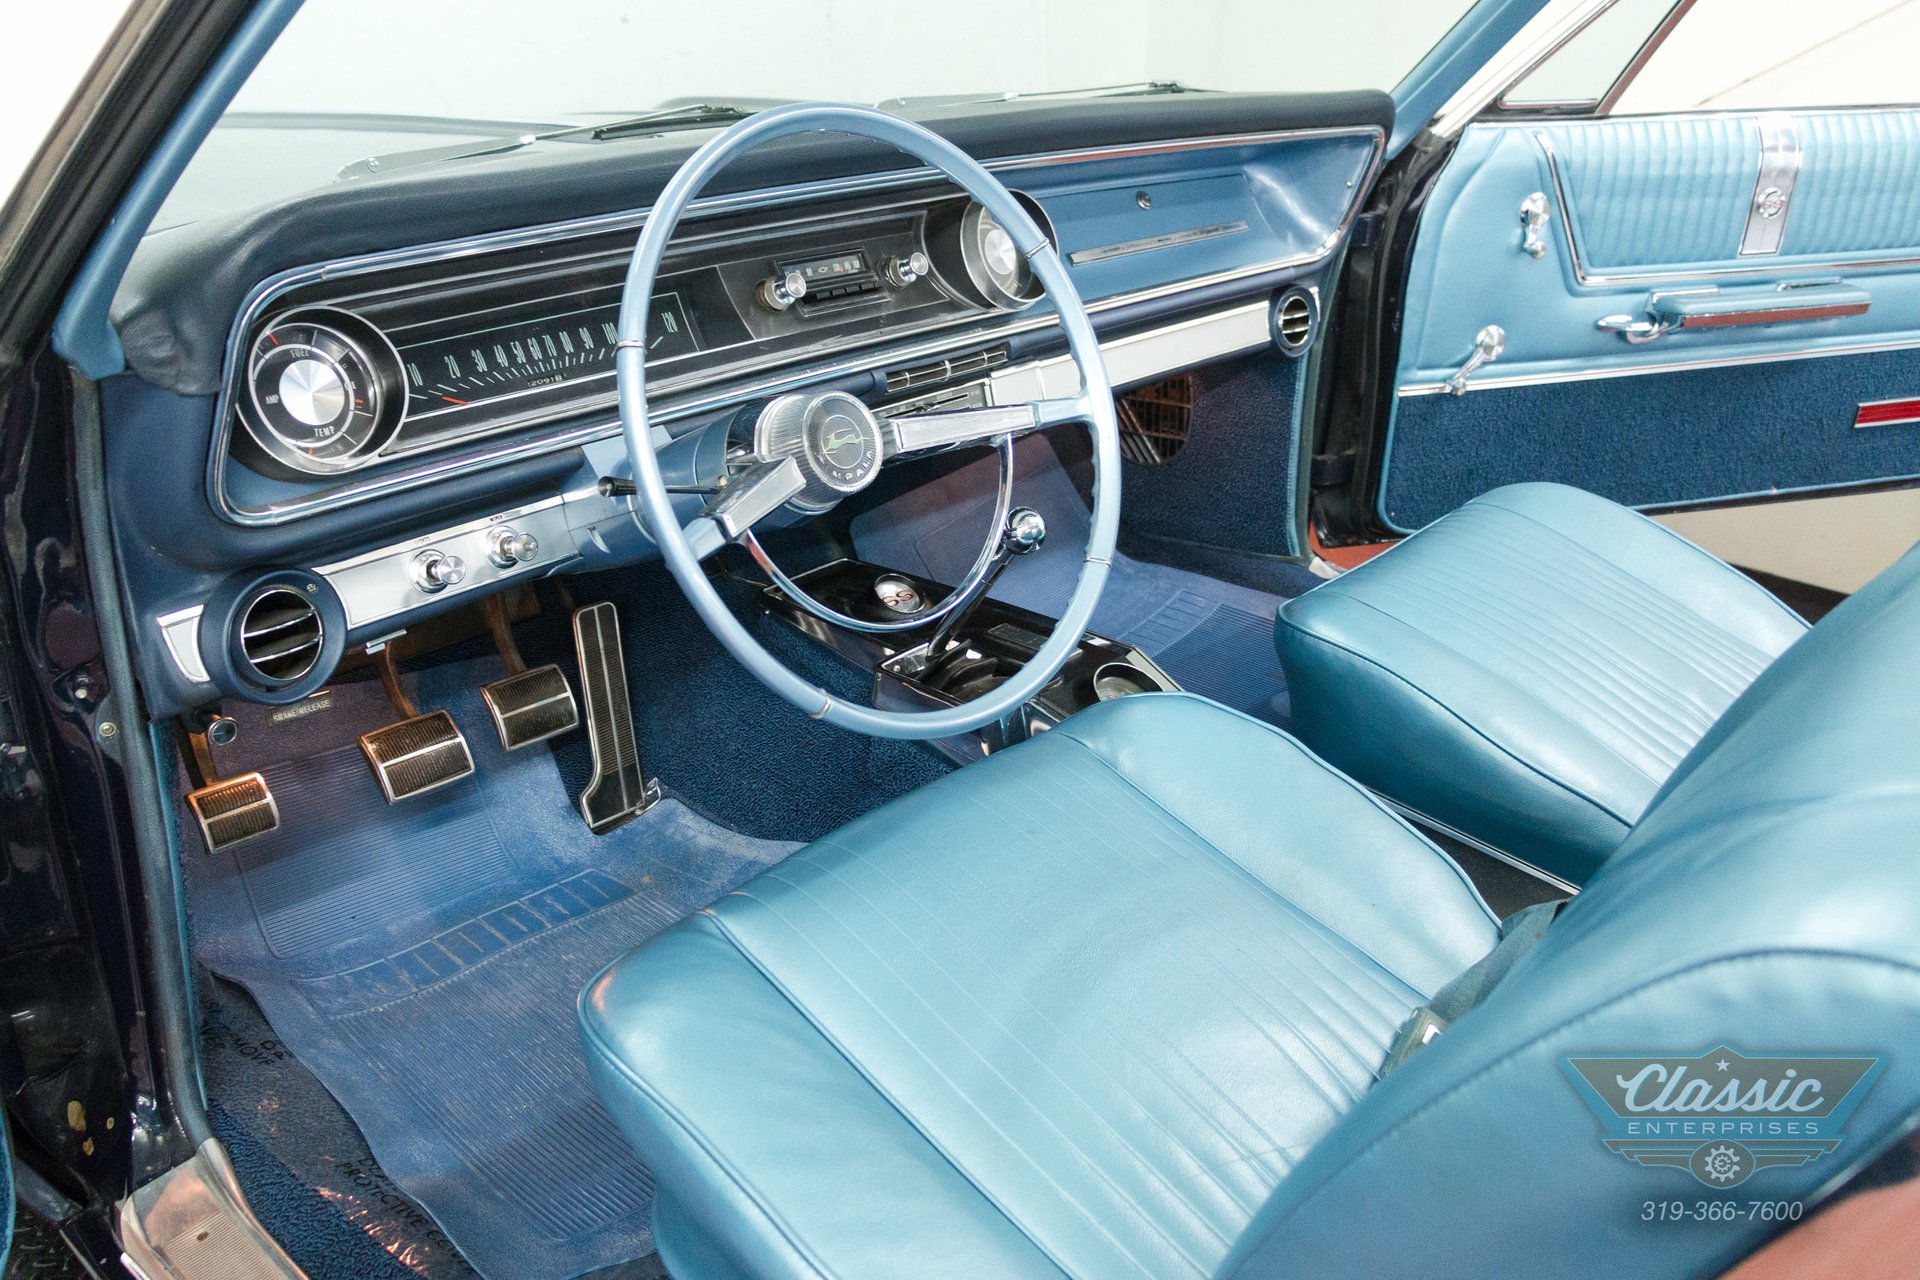 1965 Chevrolet Impala Duffy S Classic Cars